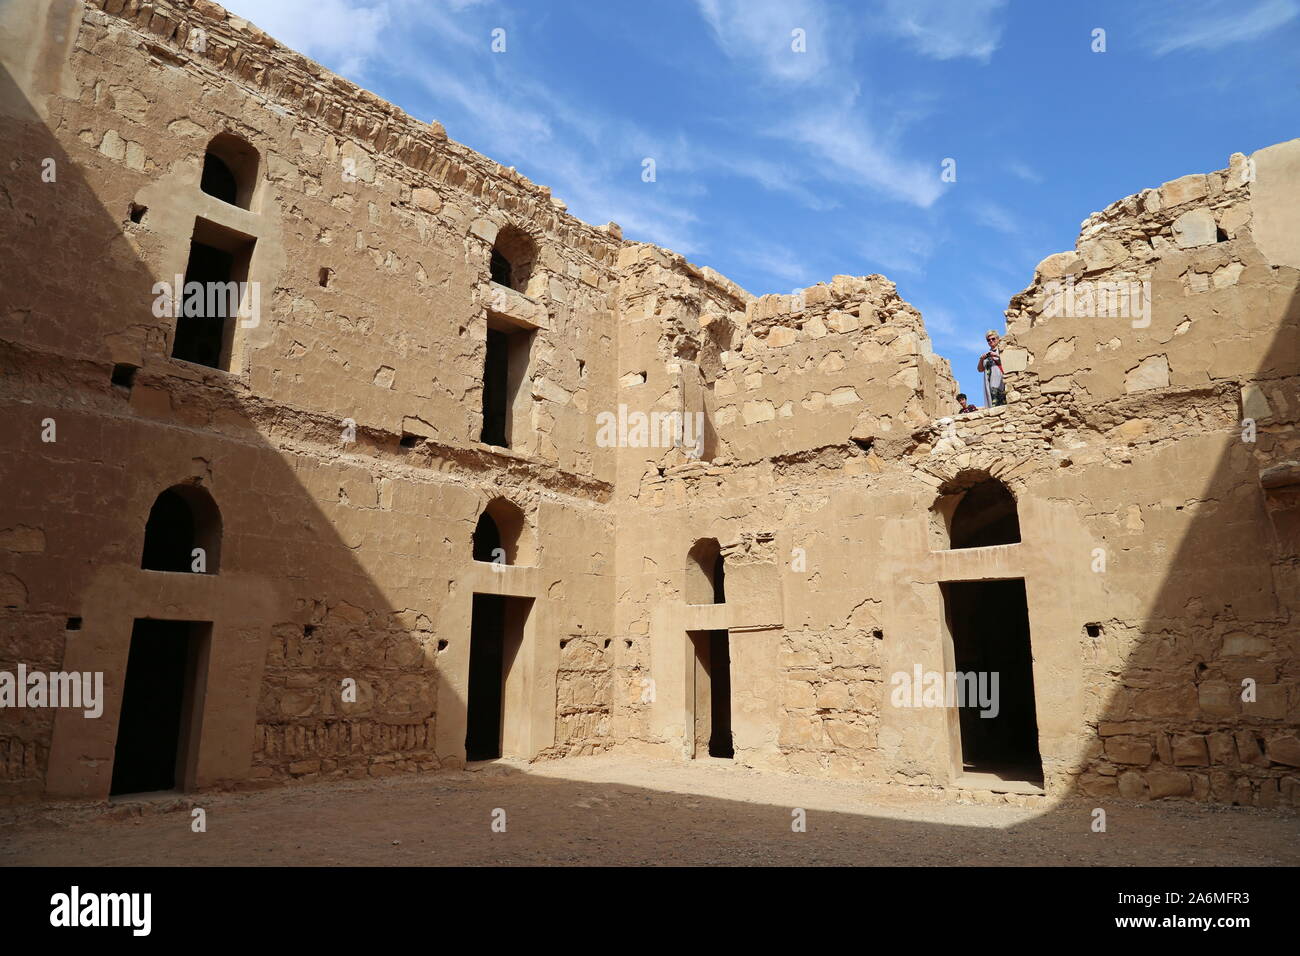 Central courtyard, Qasr Al Kharana, Umayyad period Desert Castle, Amman Governorate, Jordan, Middle East Stock Photo